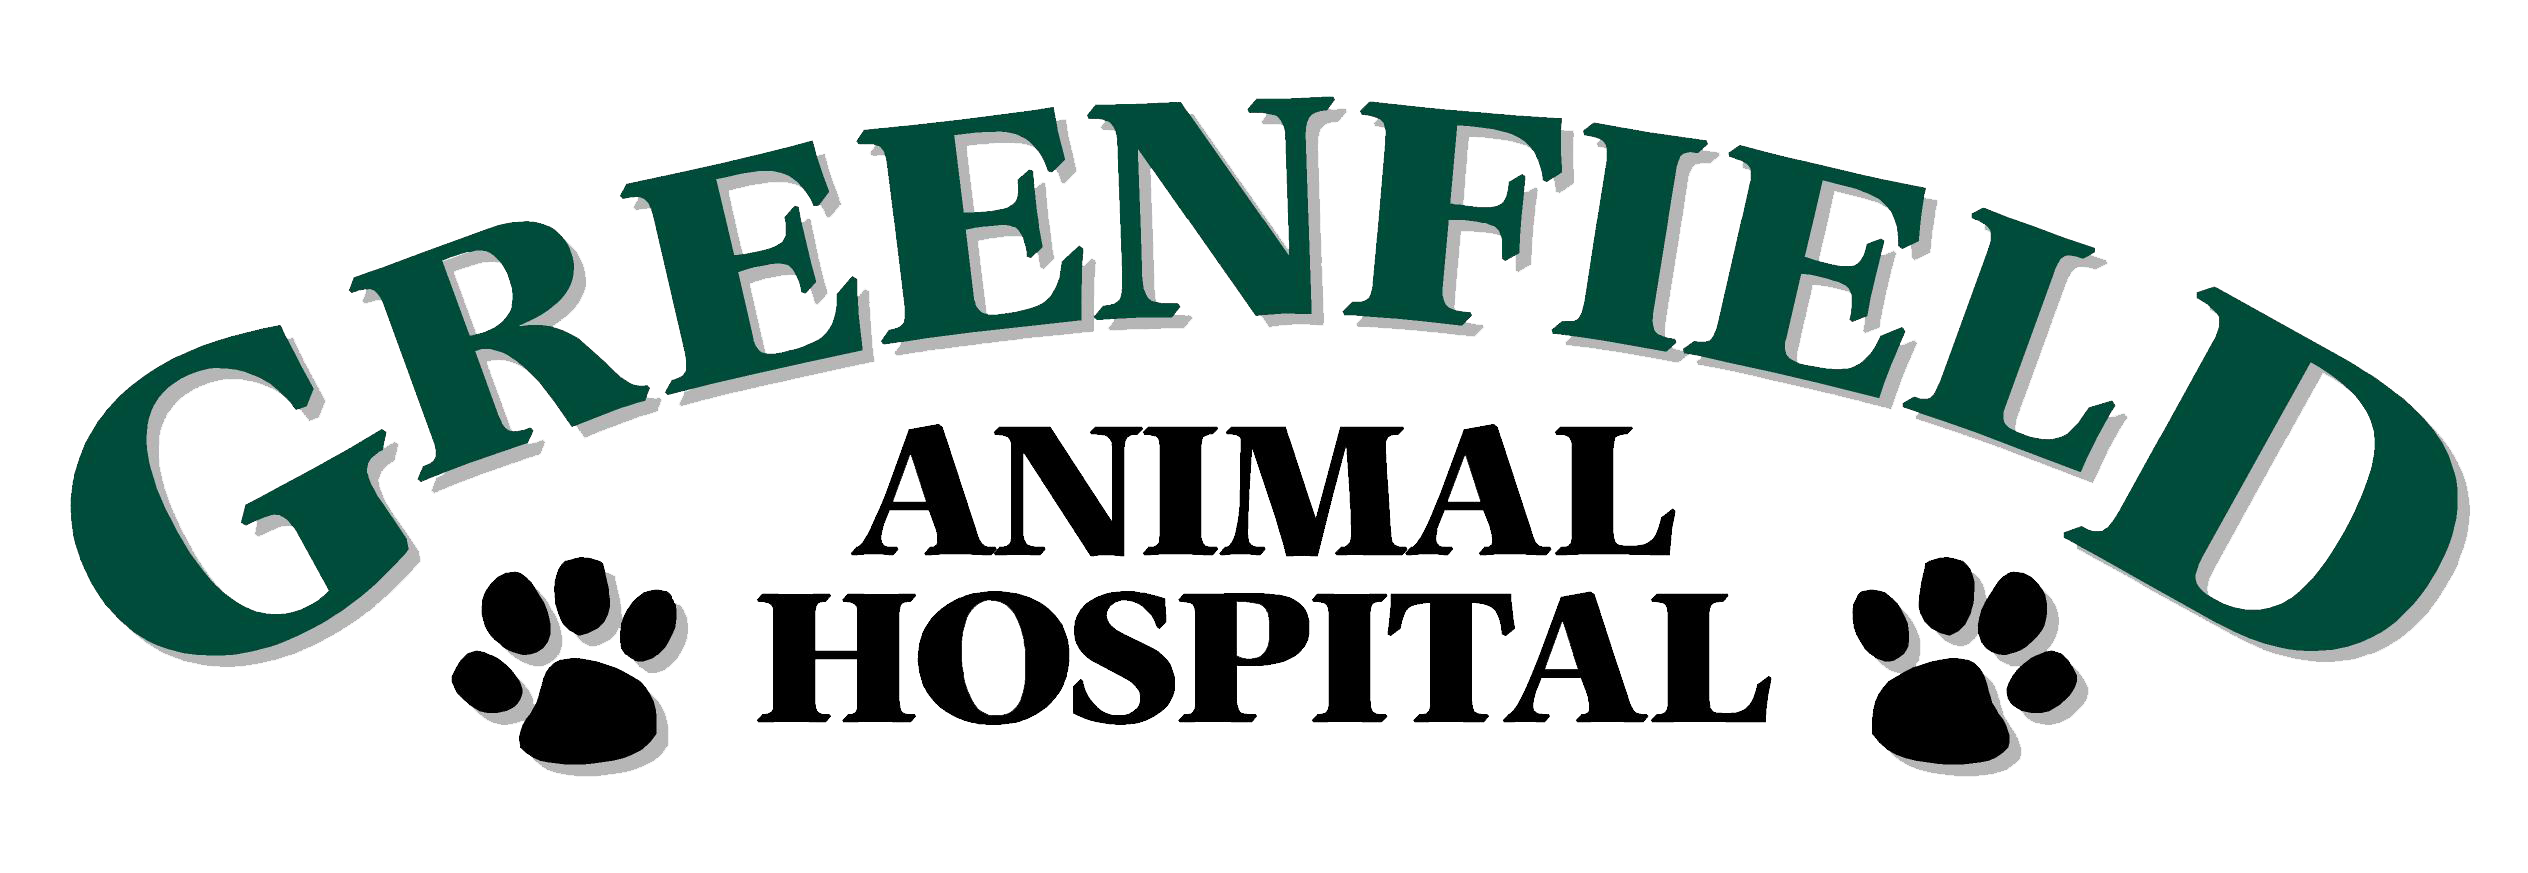 Best Veterinary Hospital In Metro Detroit | Greenfield Animal Hospital